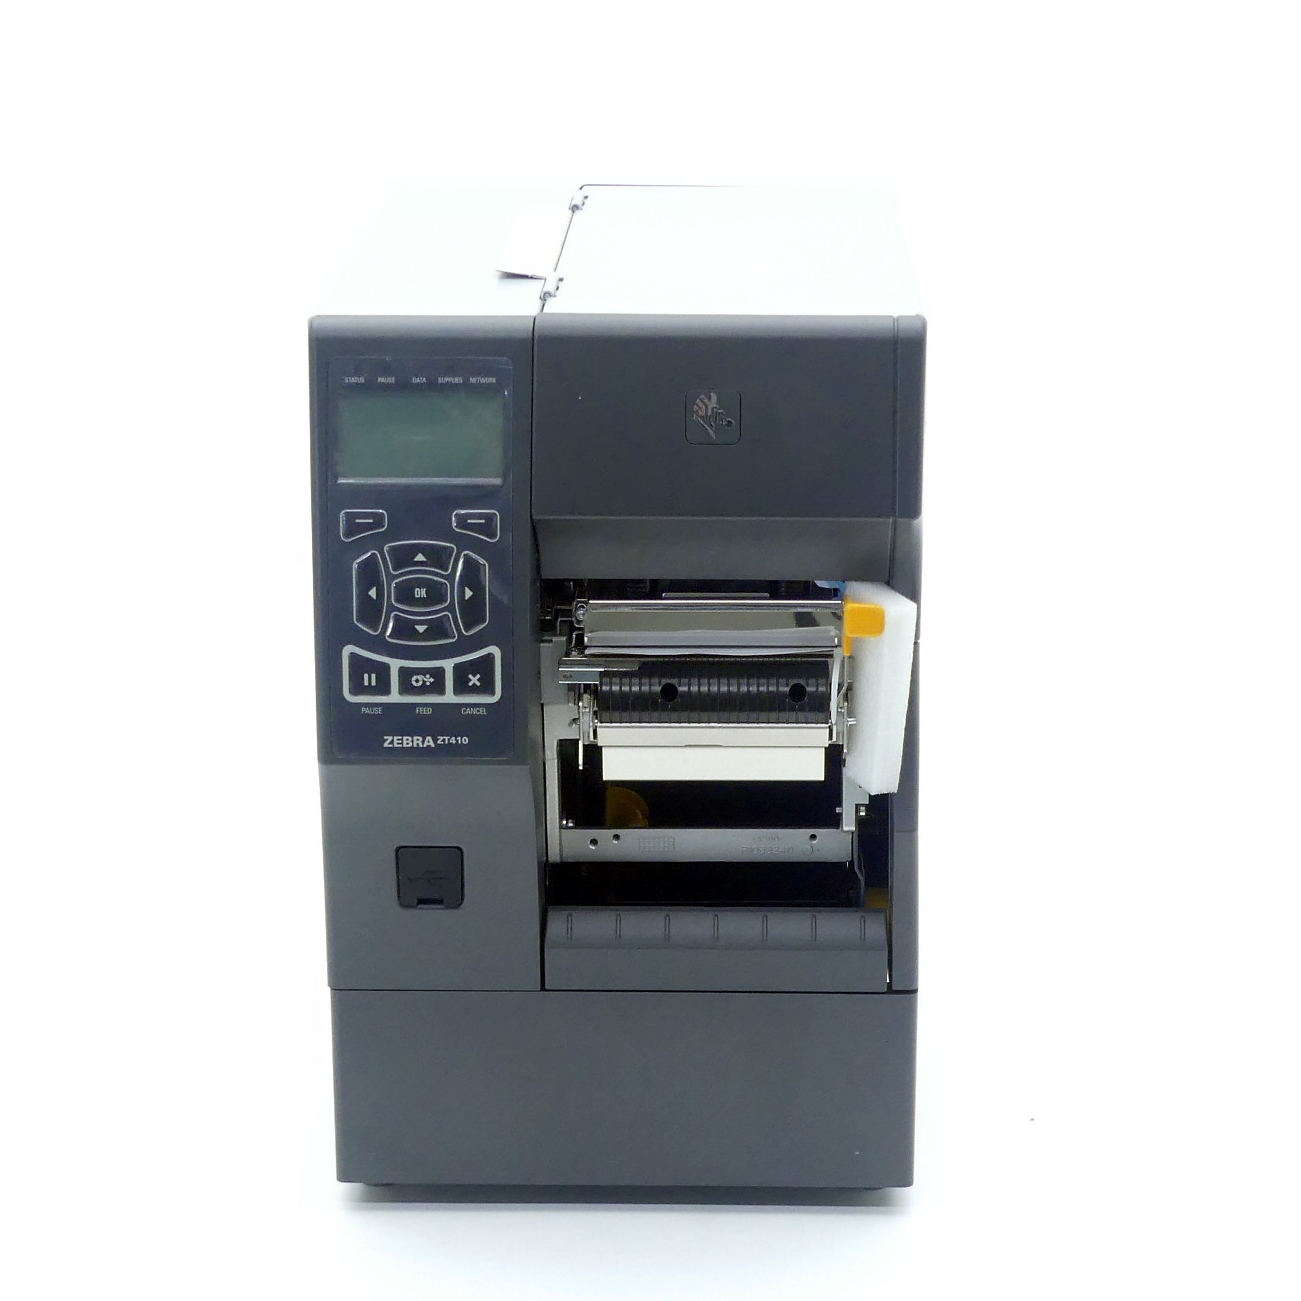 Etikettendrucker ZT410 